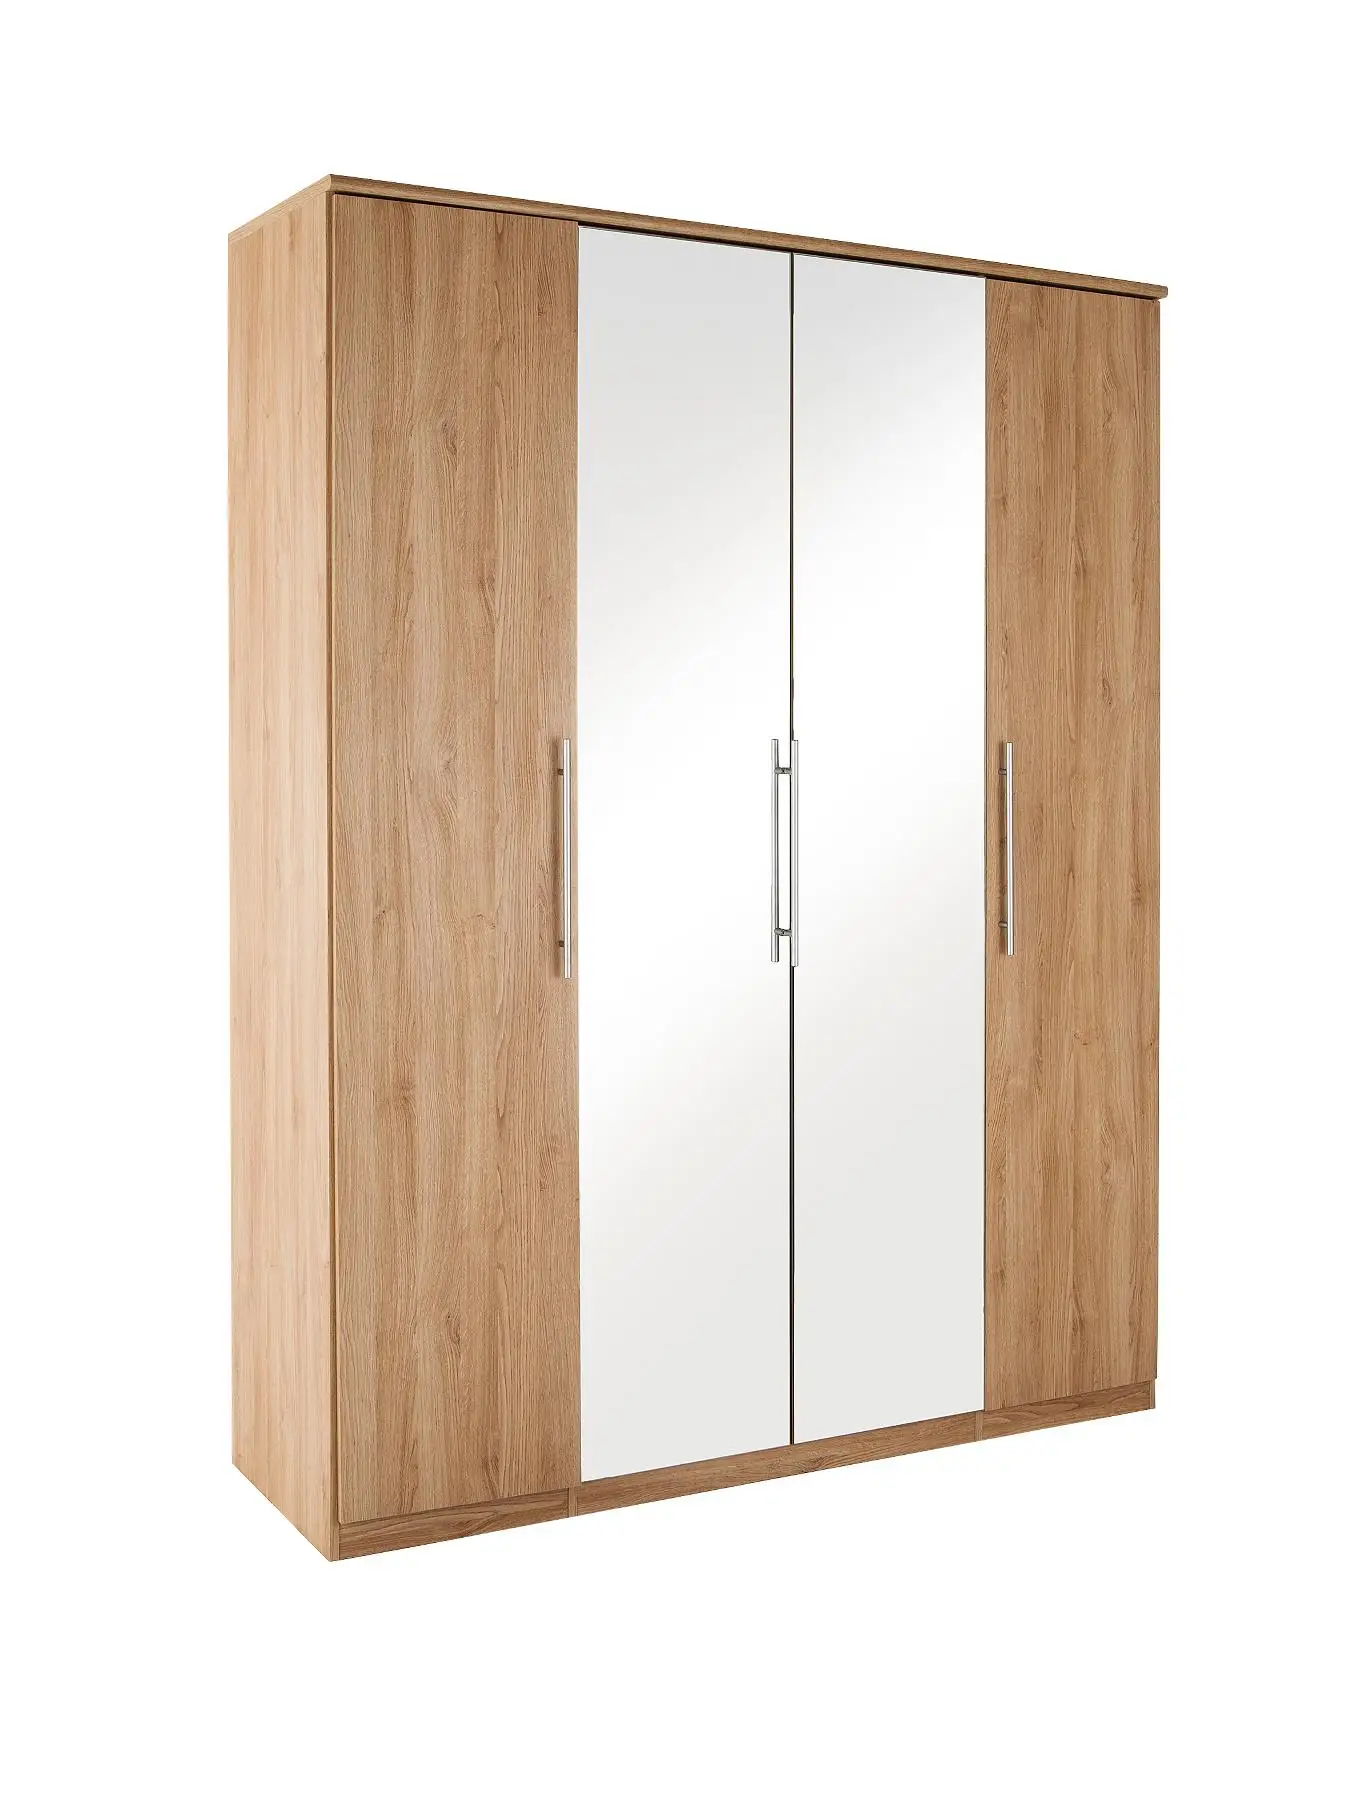 Modern Mdf Wooden Panel Furniture Wardrobe Closet Factory Price - Buy ...